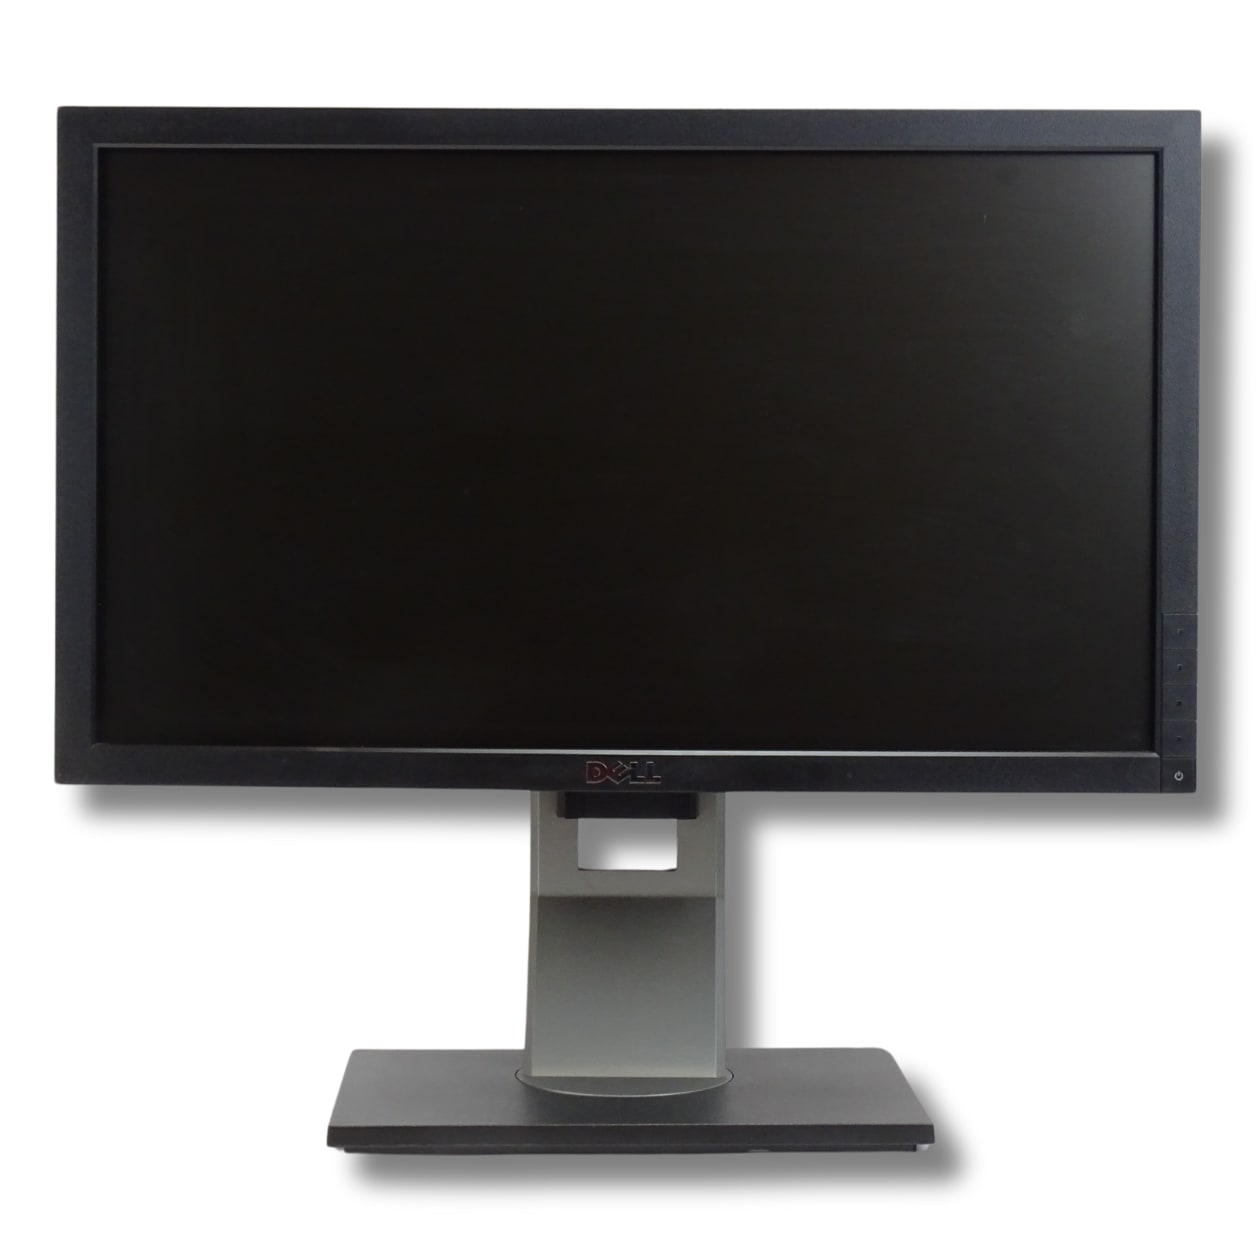 Dell P 2011Ht Monitor - 20,0 Zoll - 1600 x 900 - 5 ms - Schwarz/Silber  - Sehr gut